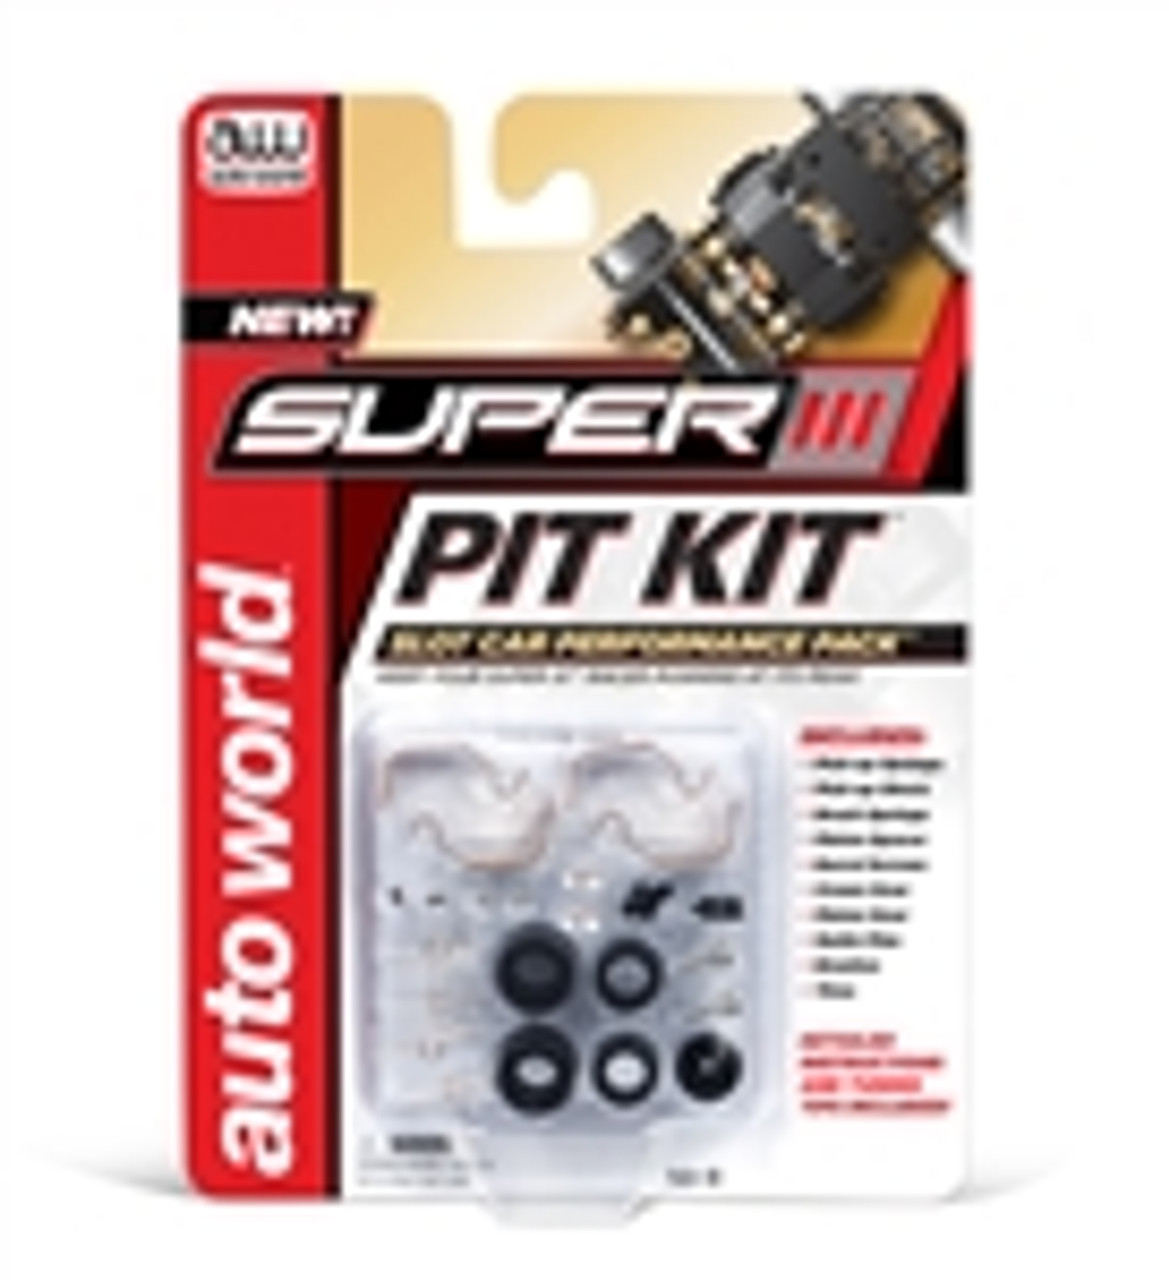 Auto World 00301 Super III Pit Kit